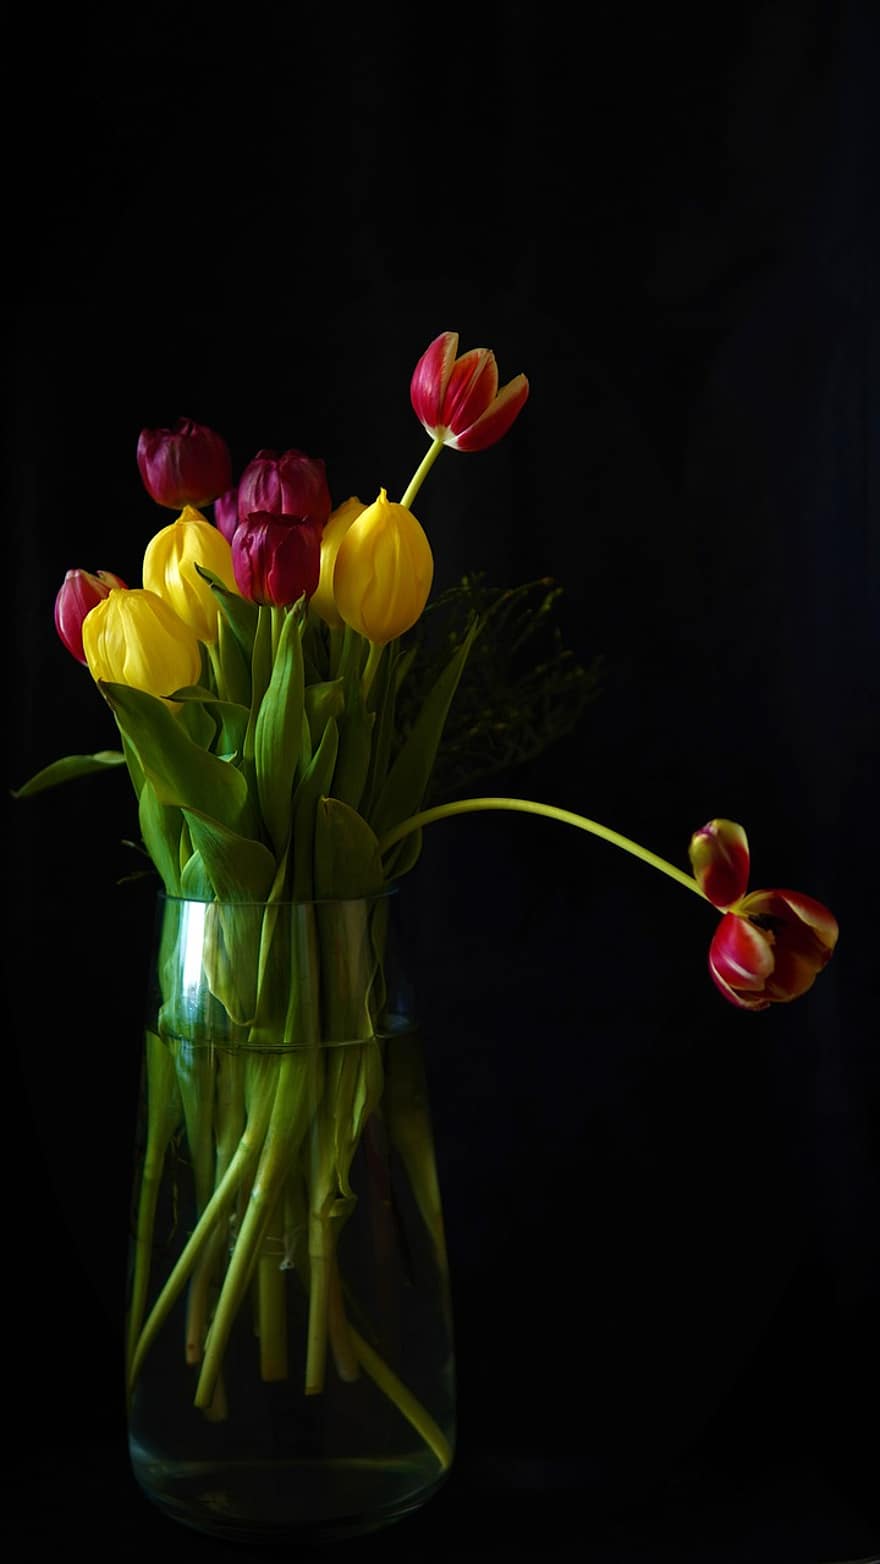 Tulips, Flowers, Vase, Flower Vase, Tulip Bouquet, Fresh Flowers, Blossom, Bloom, Spring, Bouquet, Black Background